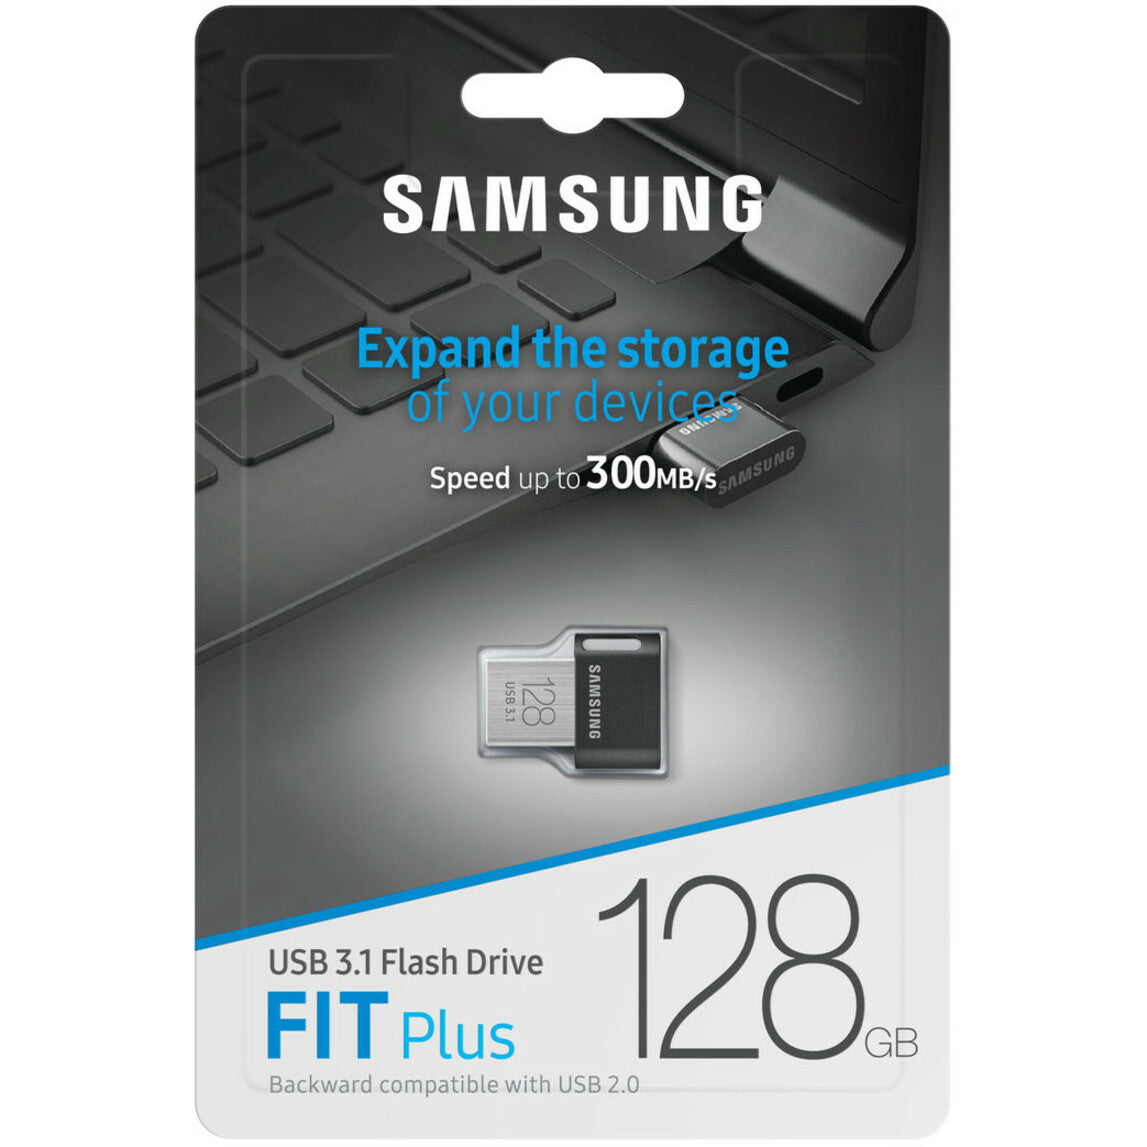 Samsung MUF-128AB/AM USB 3.1 Flash Drive FIT Plus 128GB, Gunmetal Gray